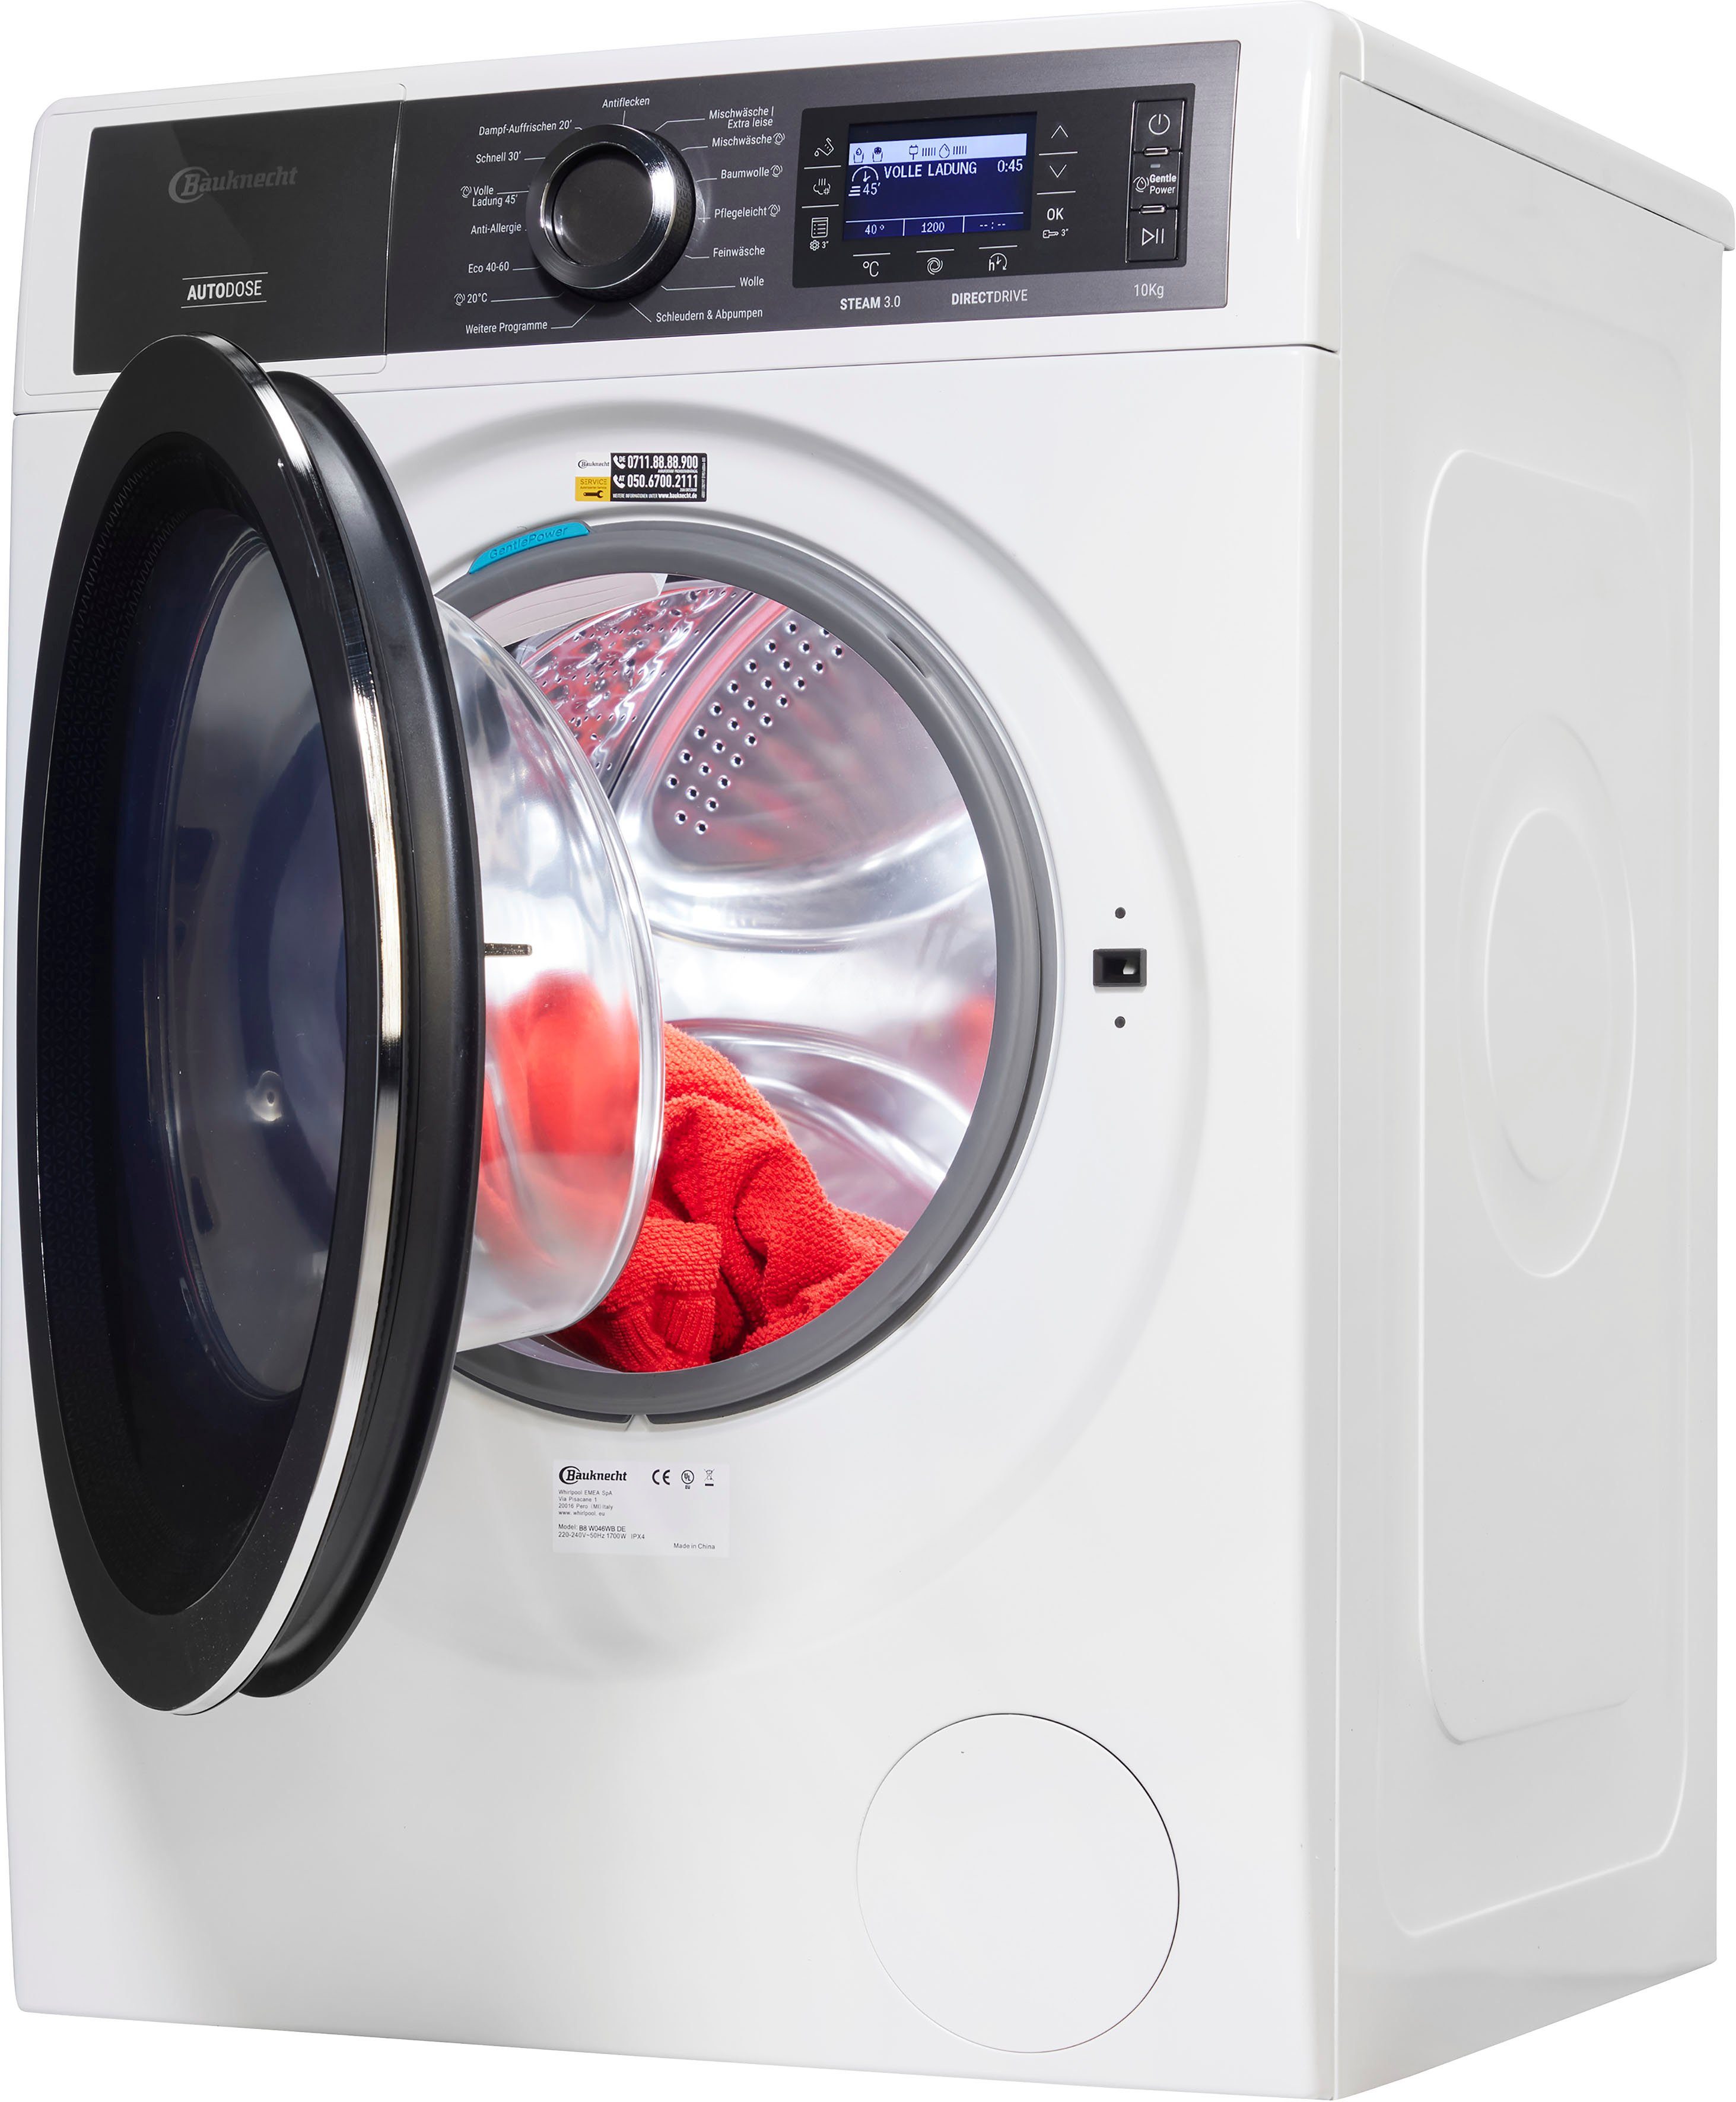 AutoDose Waschmaschine 10 1400 W046WB U/min, B8 kg, BAUKNECHT DE,